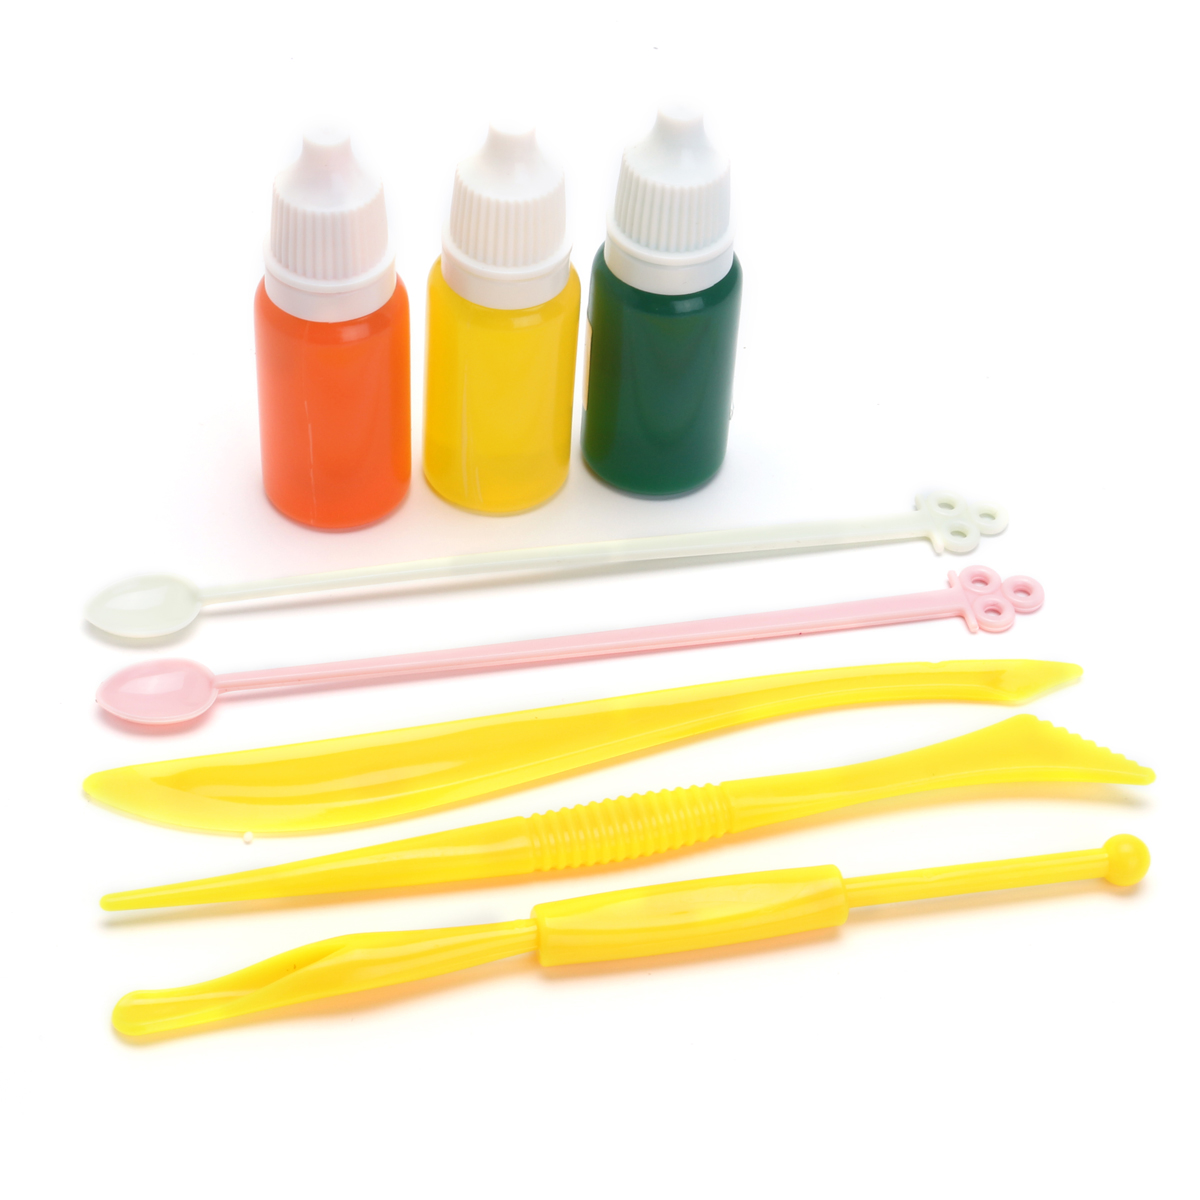 DIY-Slime-Kit-Snow-Mud-Clay-Plasticine-Styrofoam-Beads-Balls-White-Floam-Toy-Gift-1192180-3